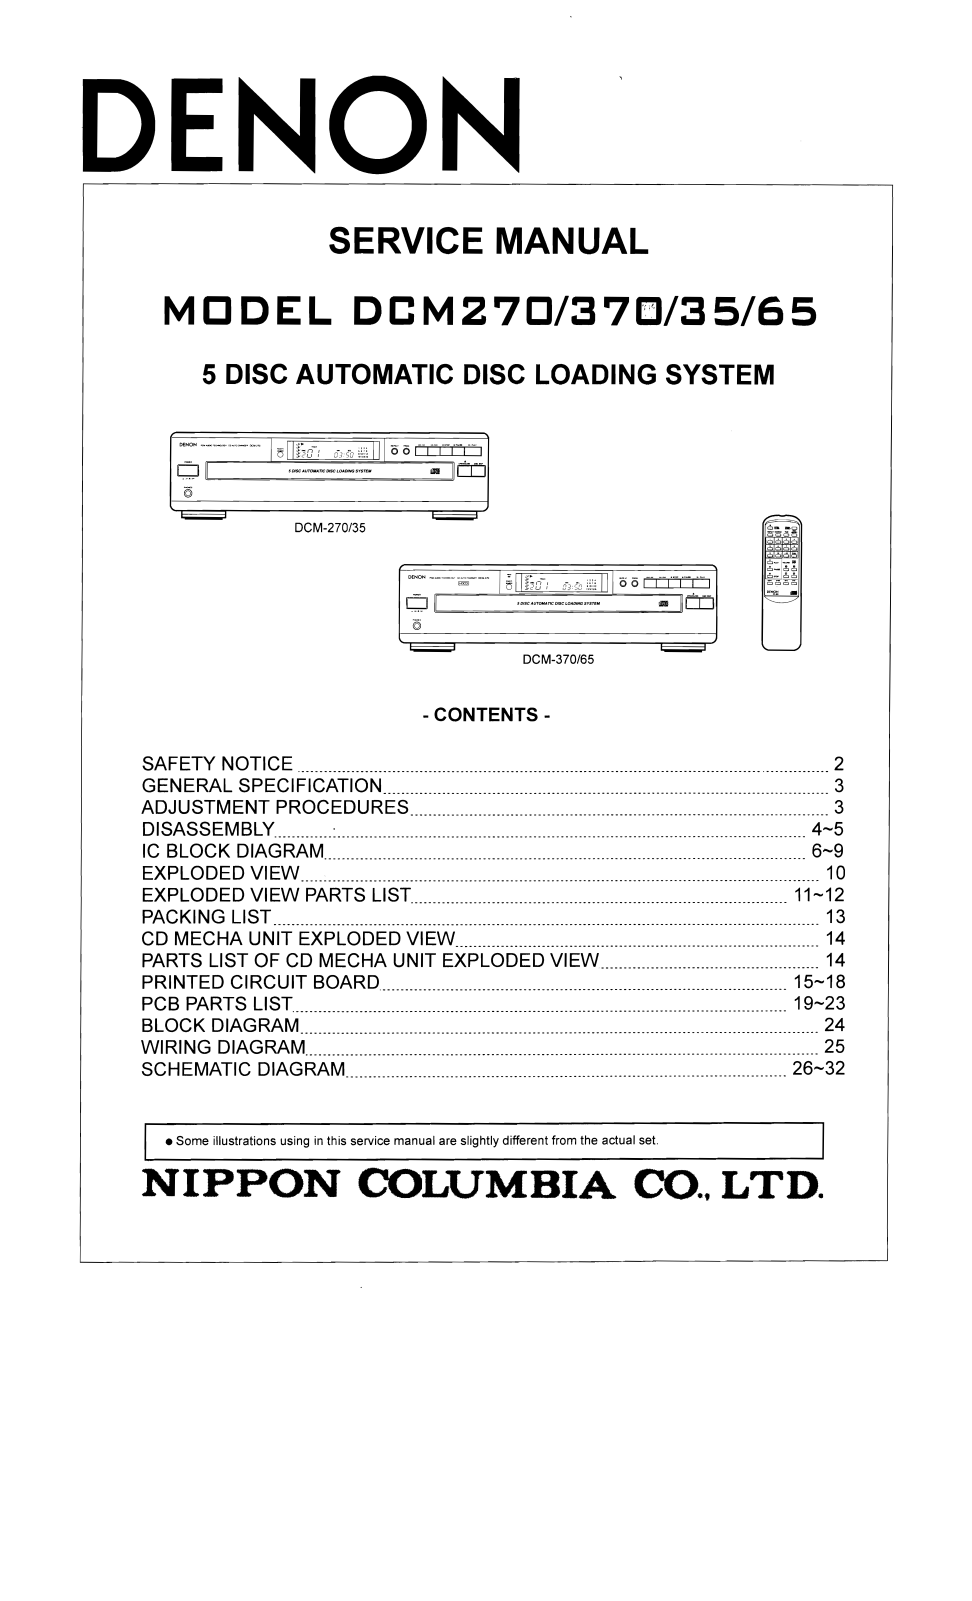 Denon DCM270-35, DCM370-65 Service Manual